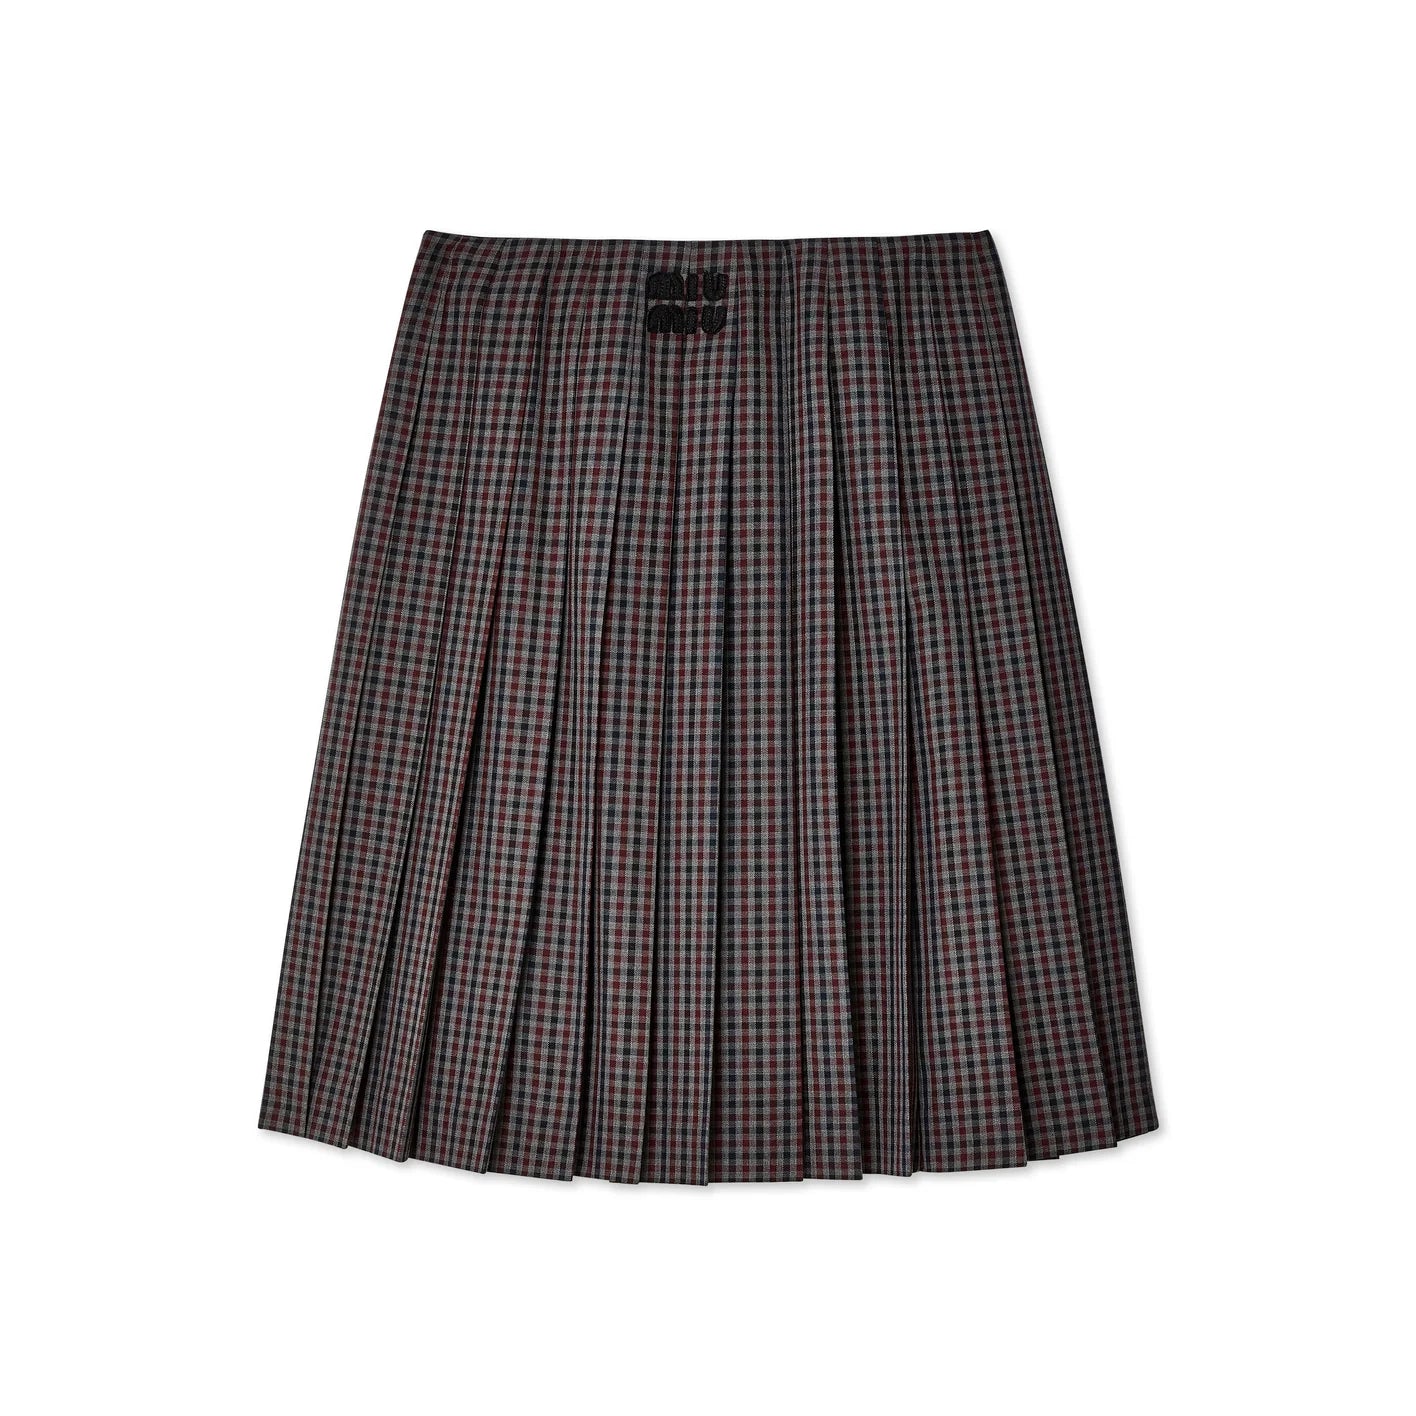 MIU MIU: Women's Pleated Gingham Check Skirt | DSMS E-SHOP